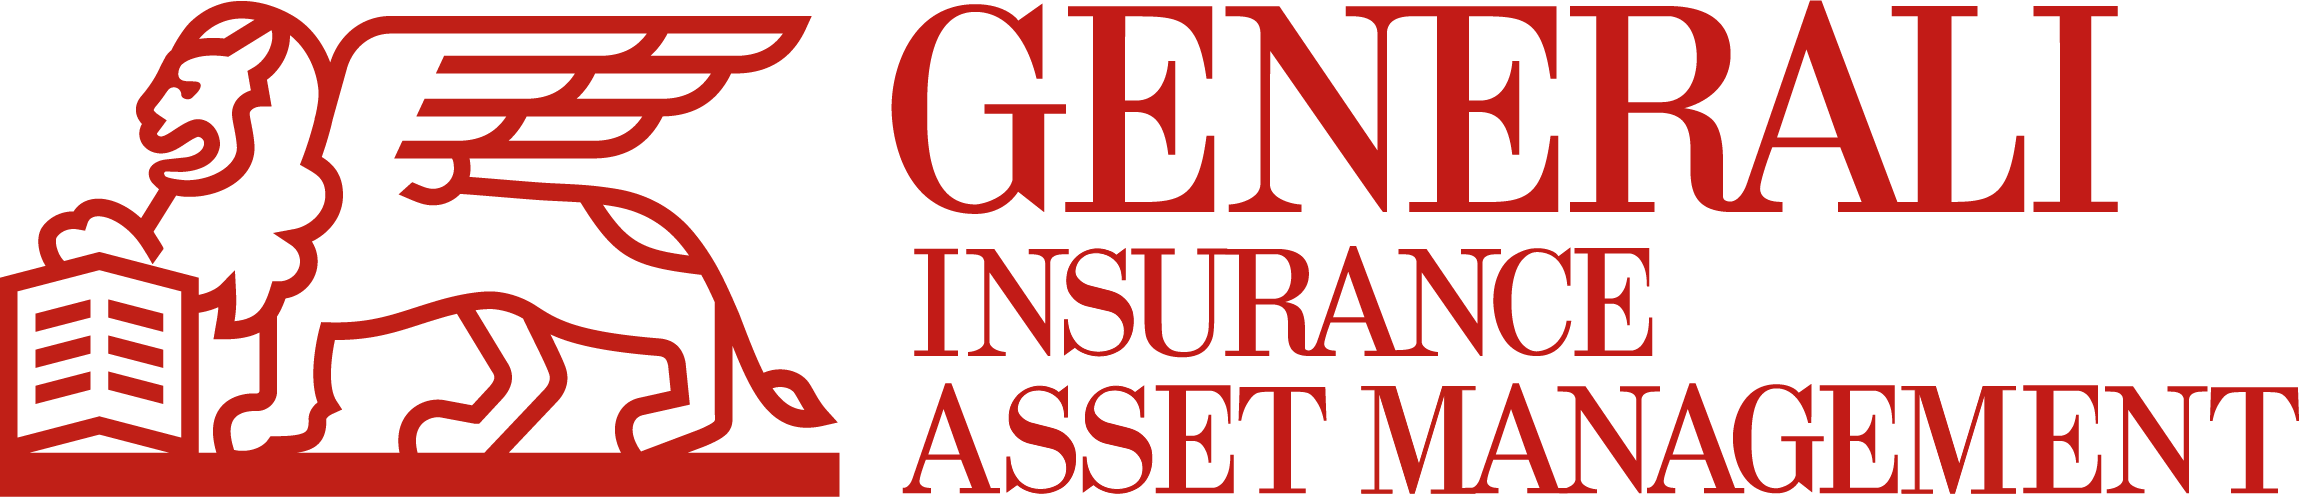 Generali Insurance Asset Management logo